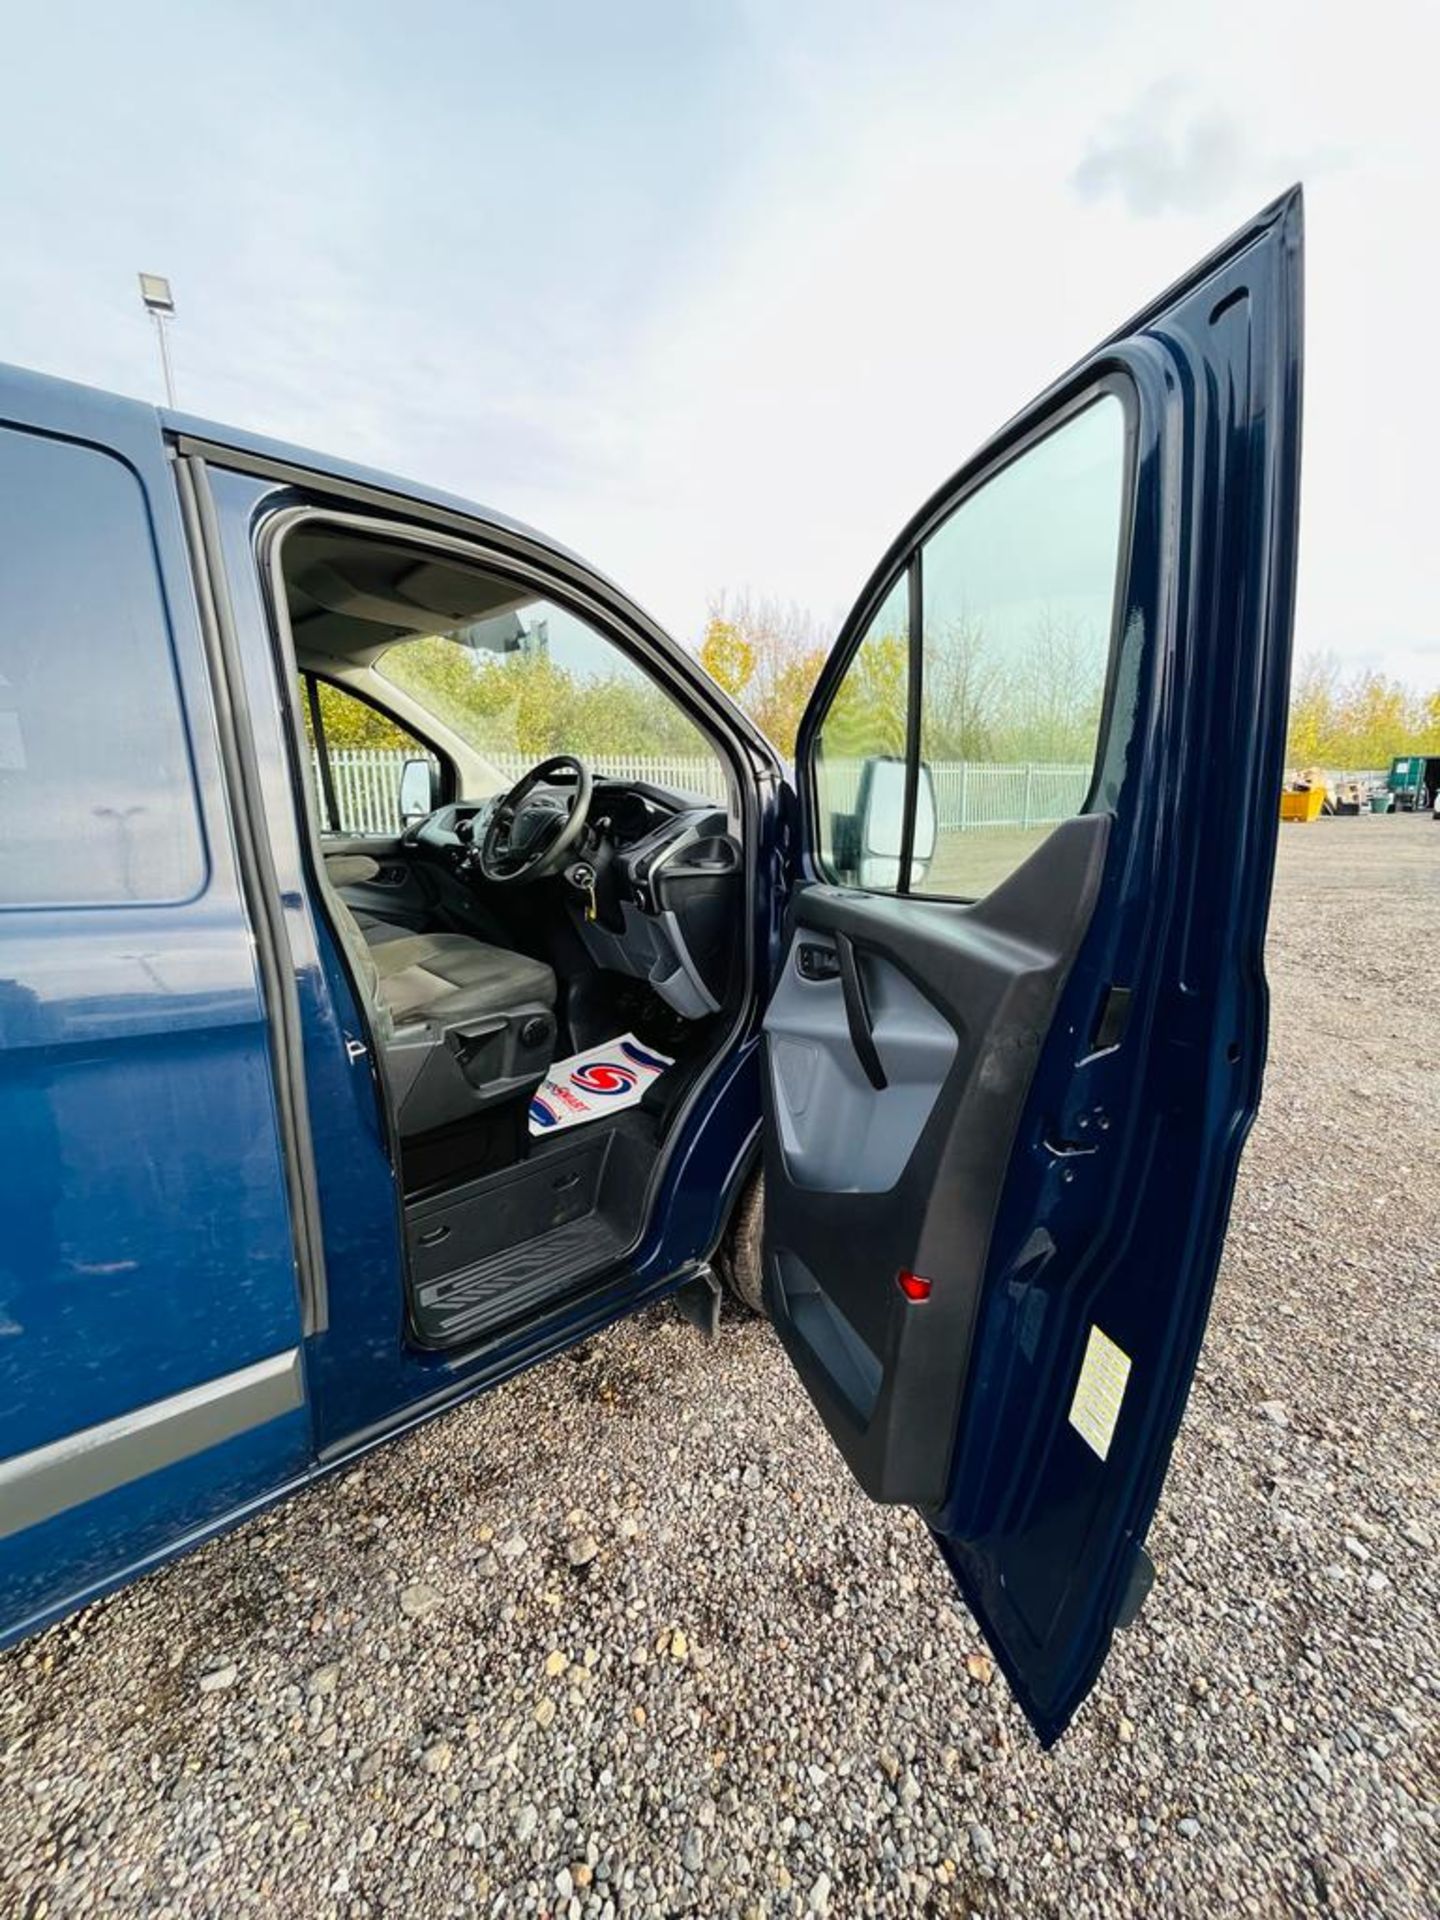 ** ON SALE ** Ford transit Custom 2.2 TDCI Eco Tech 100 270 2015 '65 Reg' - Panel Van - Image 16 of 22